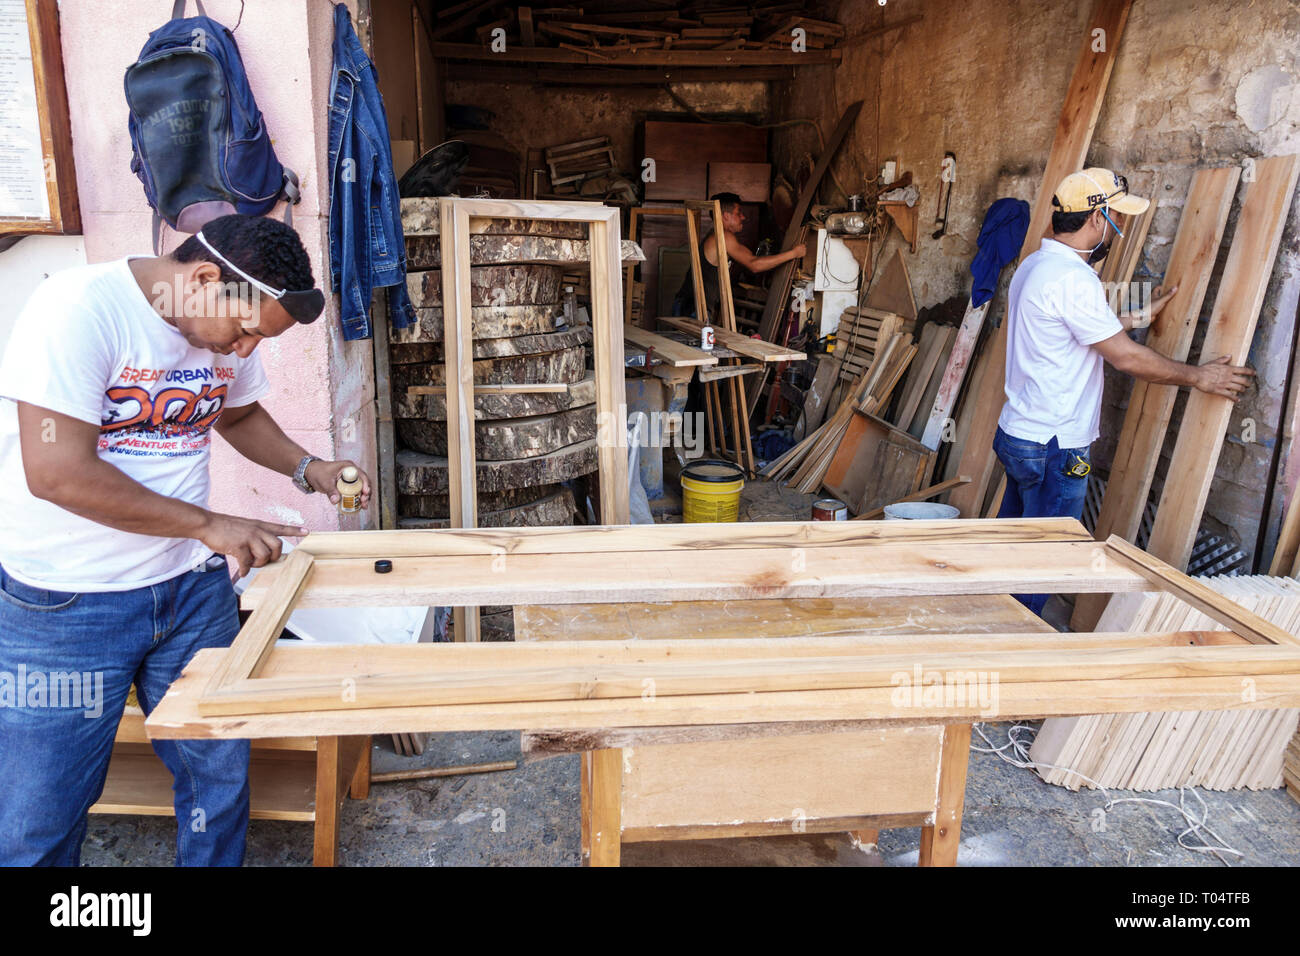 Cartagena Colombia,Center,centre,Getsemani,Hispanic resident residents,man men male,working carpenter building door,Plazuela de Pozo,COL190120011 Stock Photo